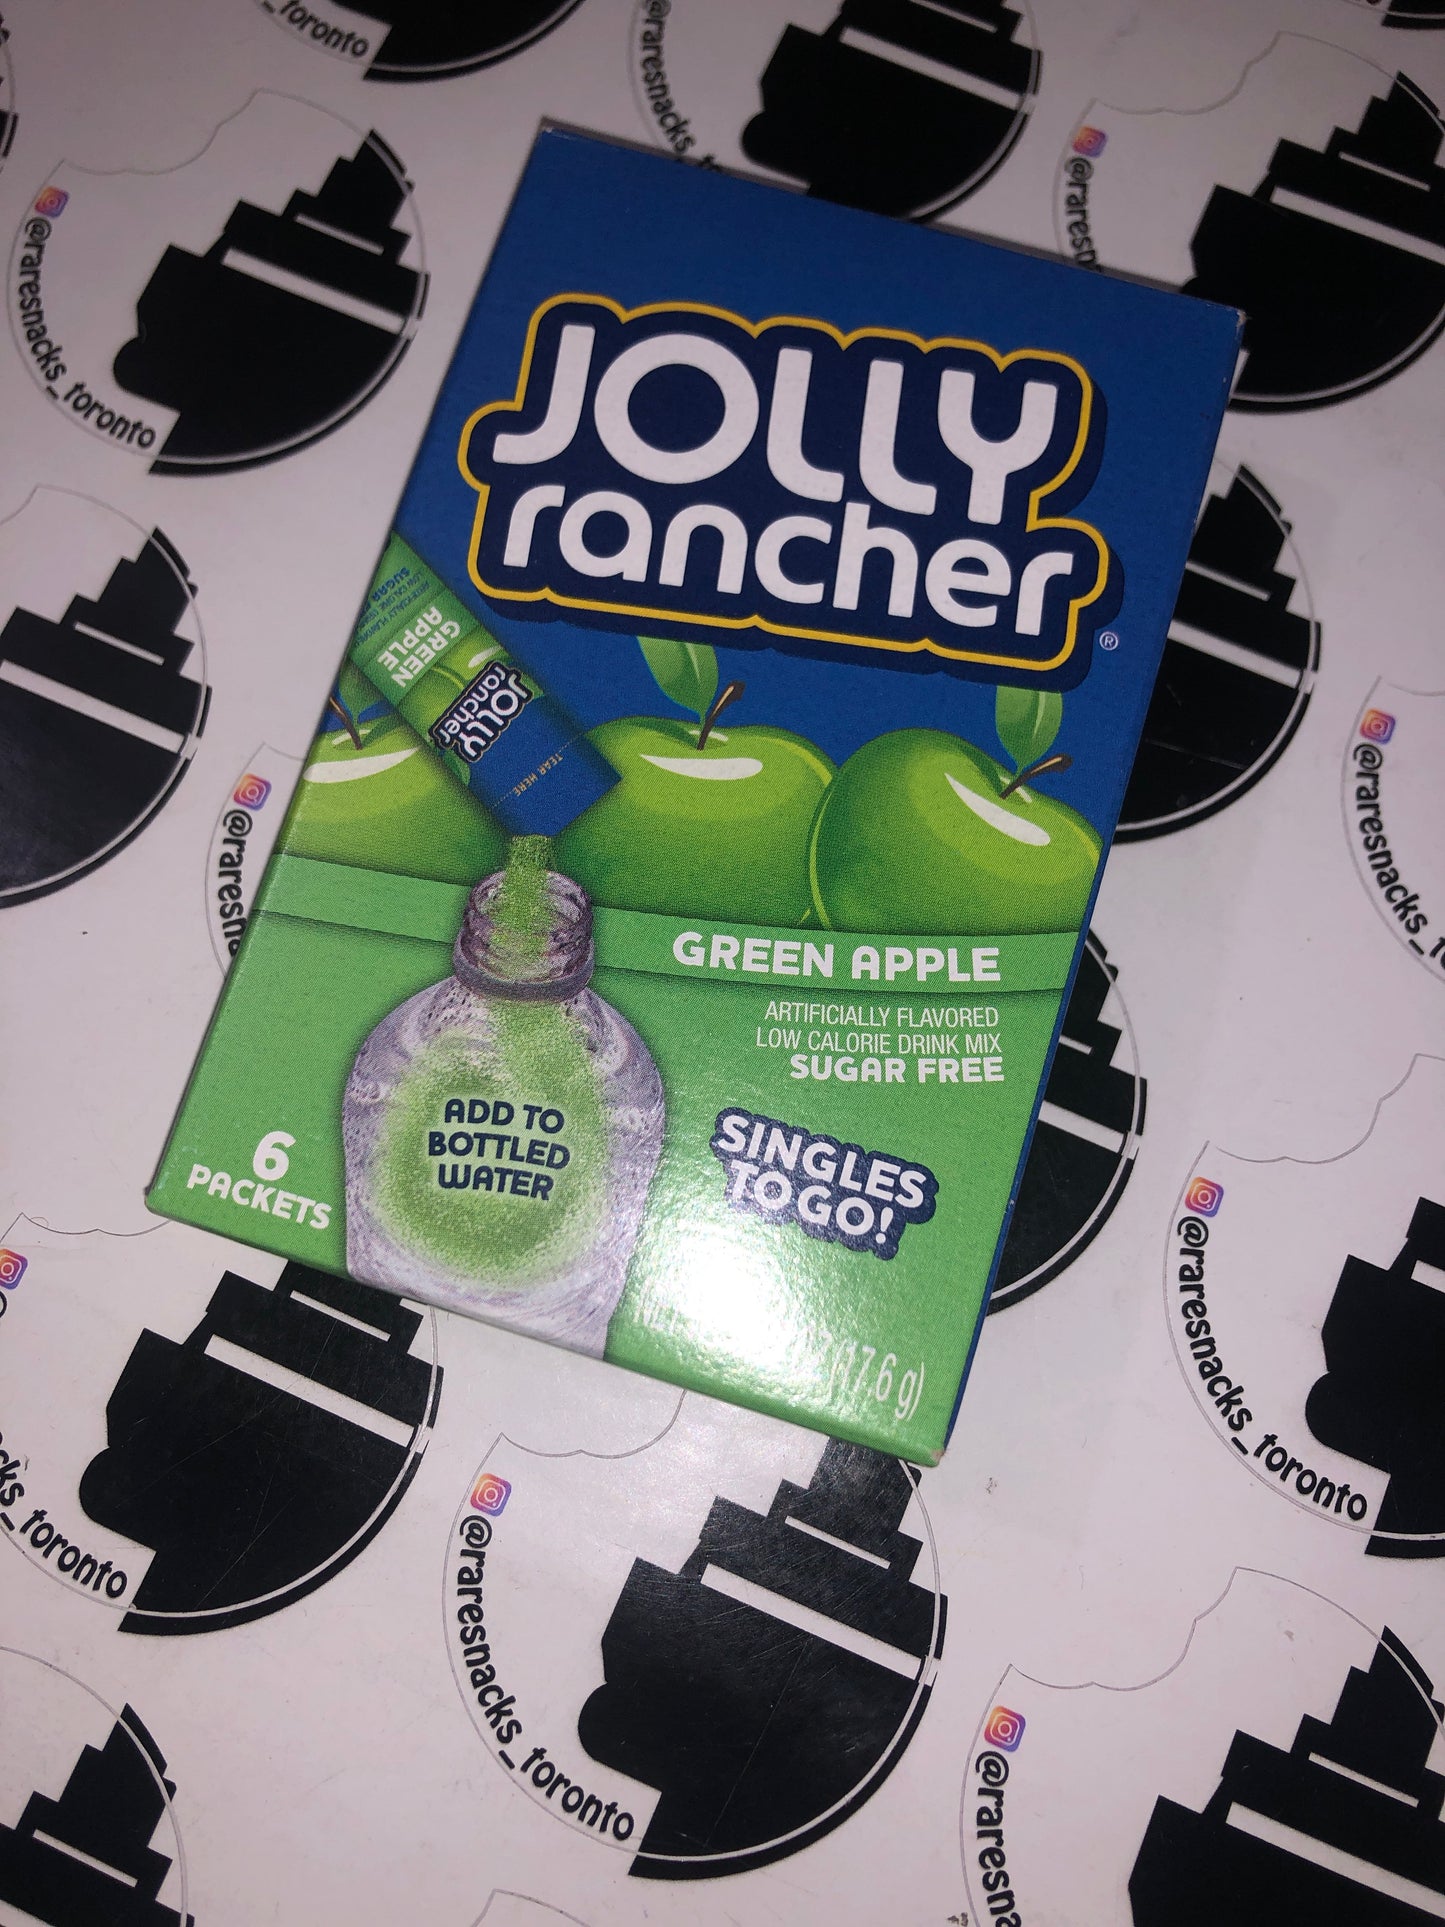 Jolly Rancher Green Apple Sugar free Singles to go